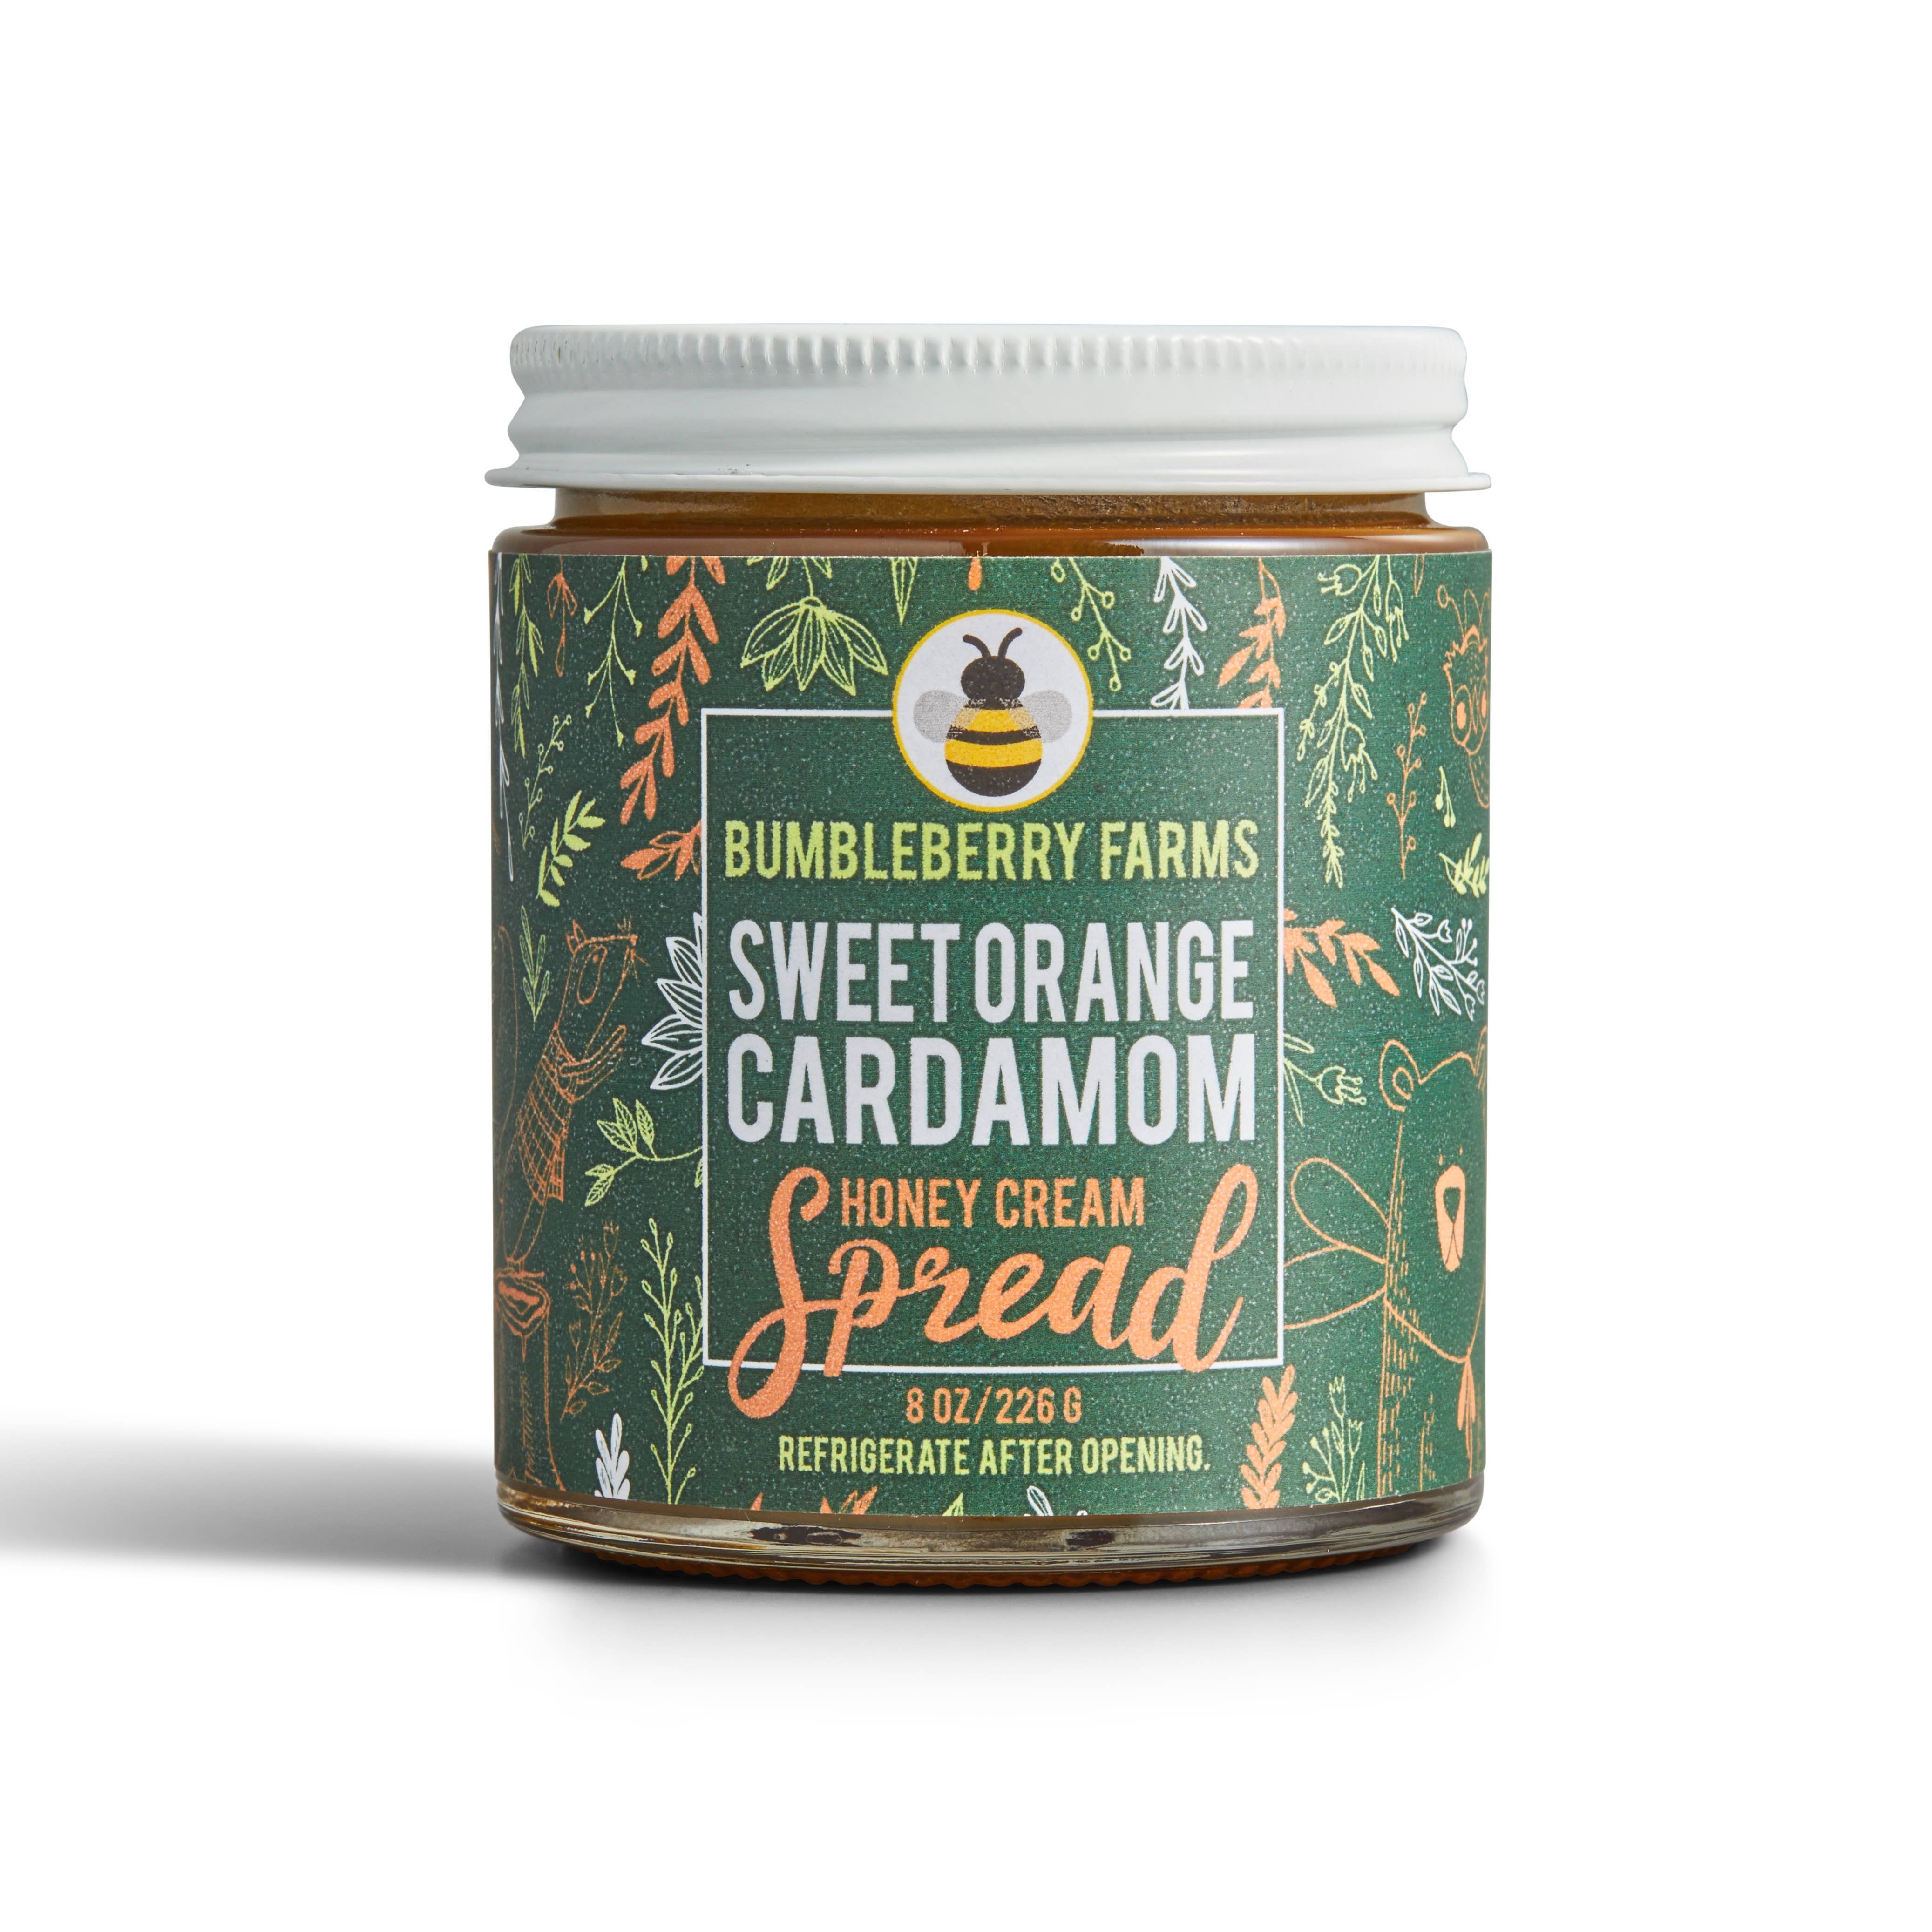 Bumbleberry Farms - Sweet Orange Cardamom Honey Cream Spread